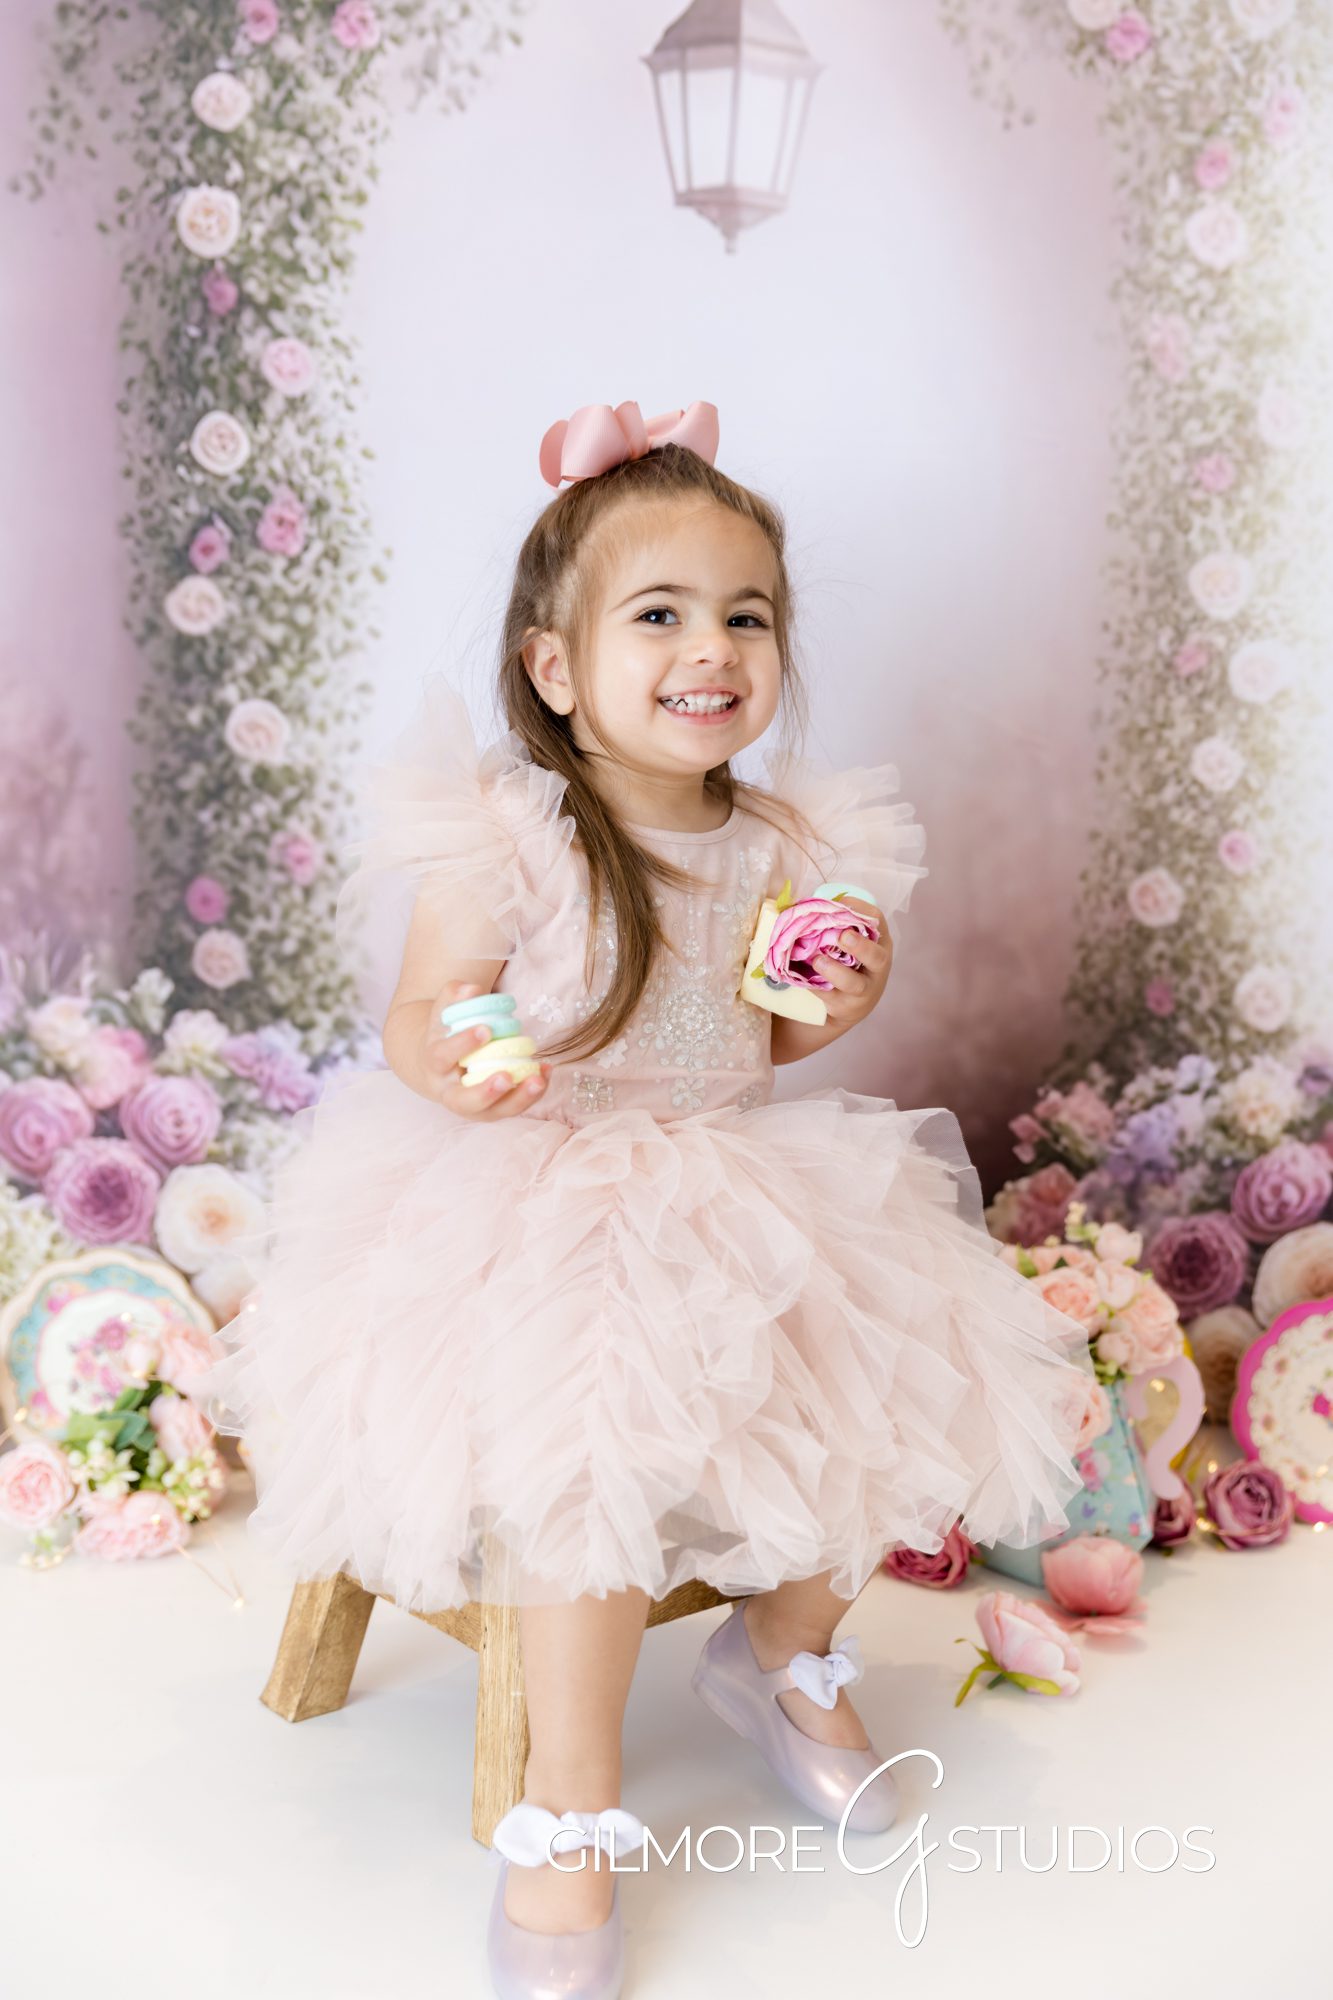 tea party cake smash, little girl, pink dress, pink bow, holding treats, smiling, gilmore studios